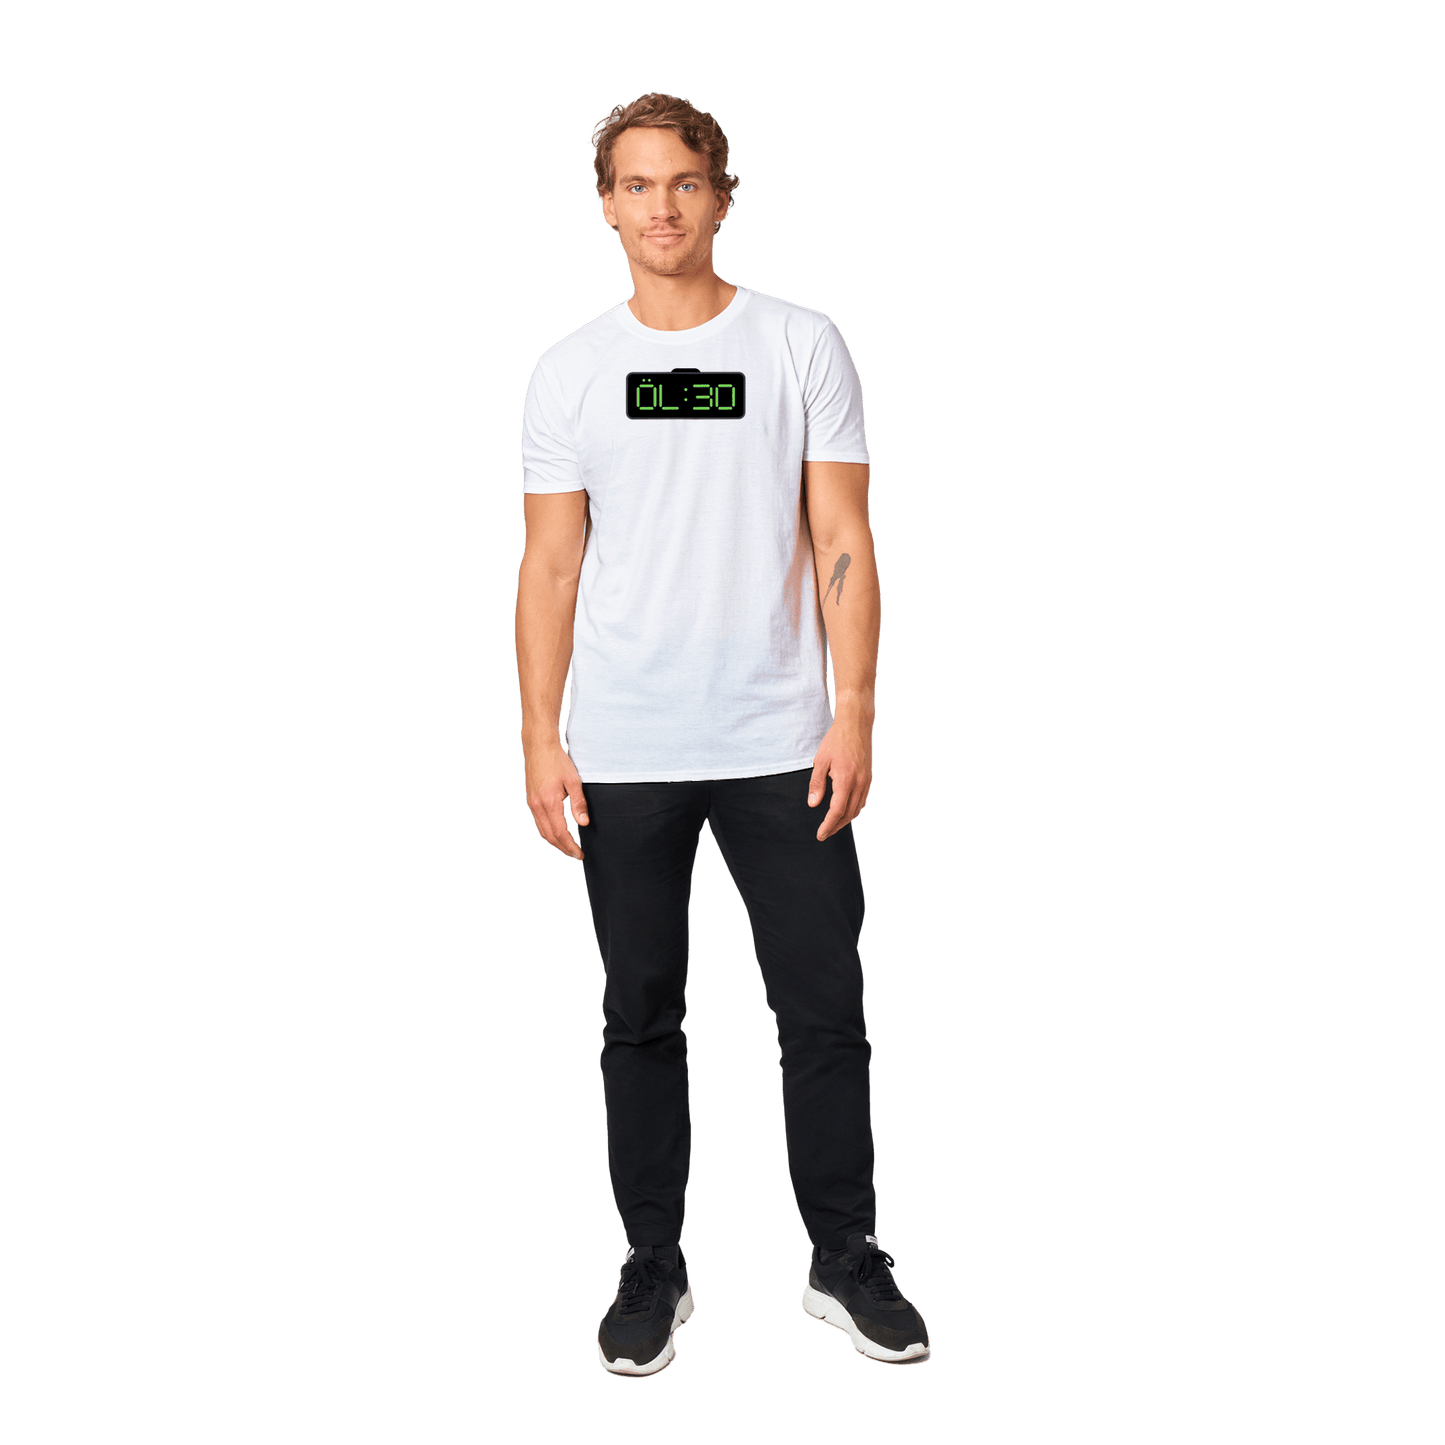 ÖL 30 - T-shirt 